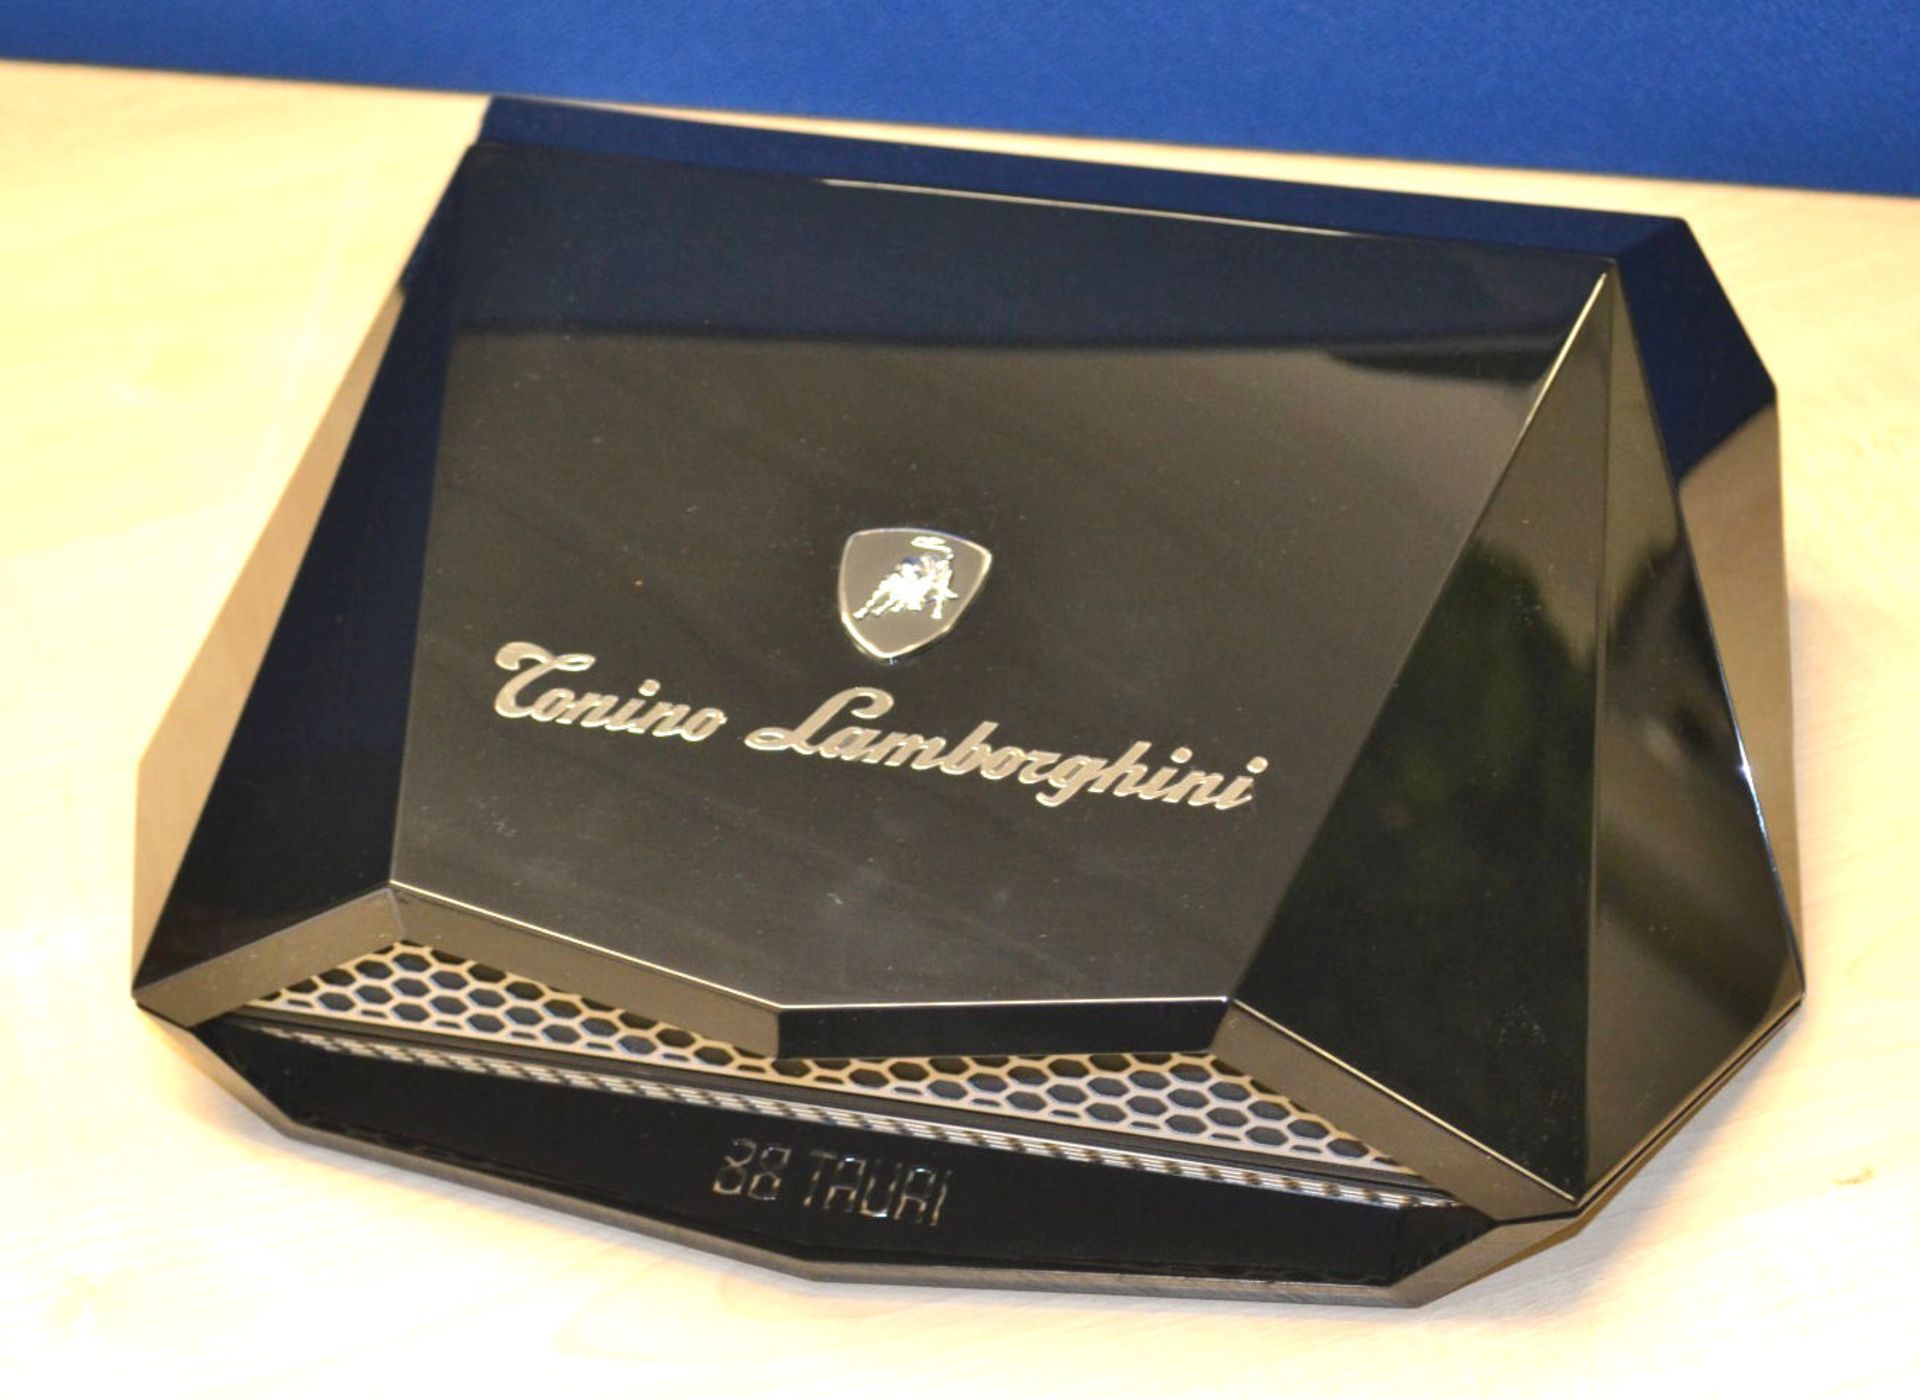 1 x Limited Edition Lamborghini "88 Tauri" Android Smart Phone - Leather Snakeskin-Style Finish - Image 13 of 26